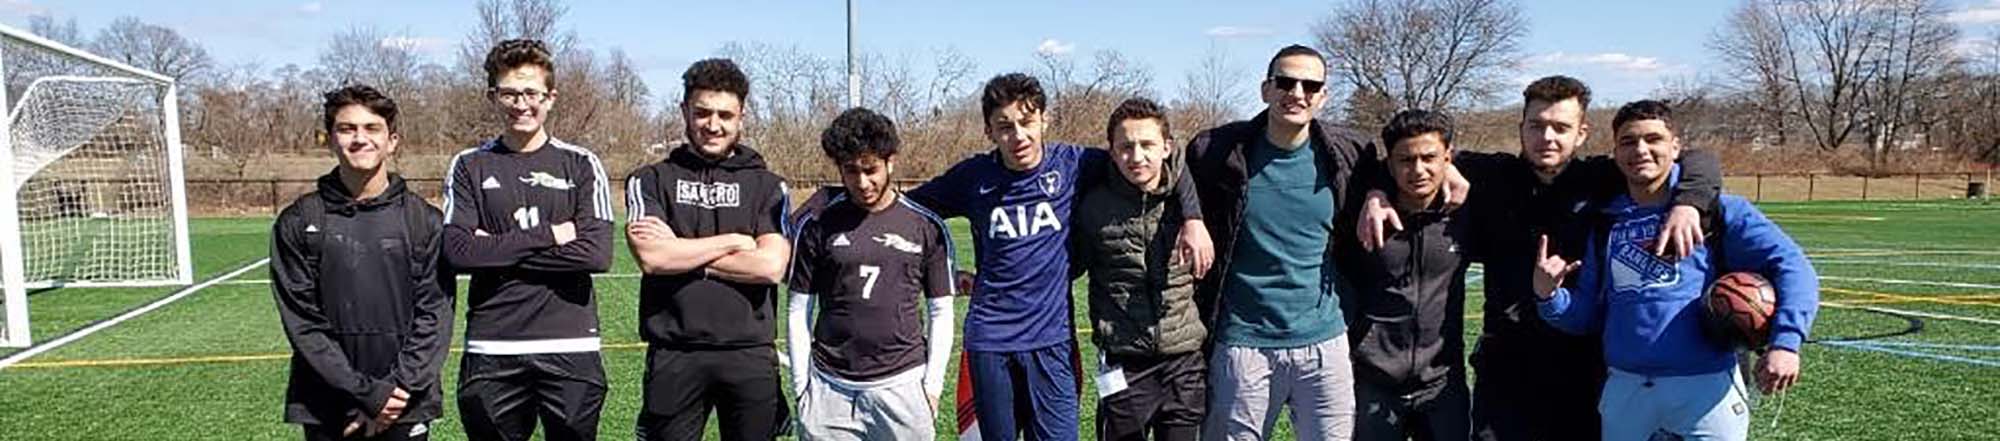 Boys Soccer Players